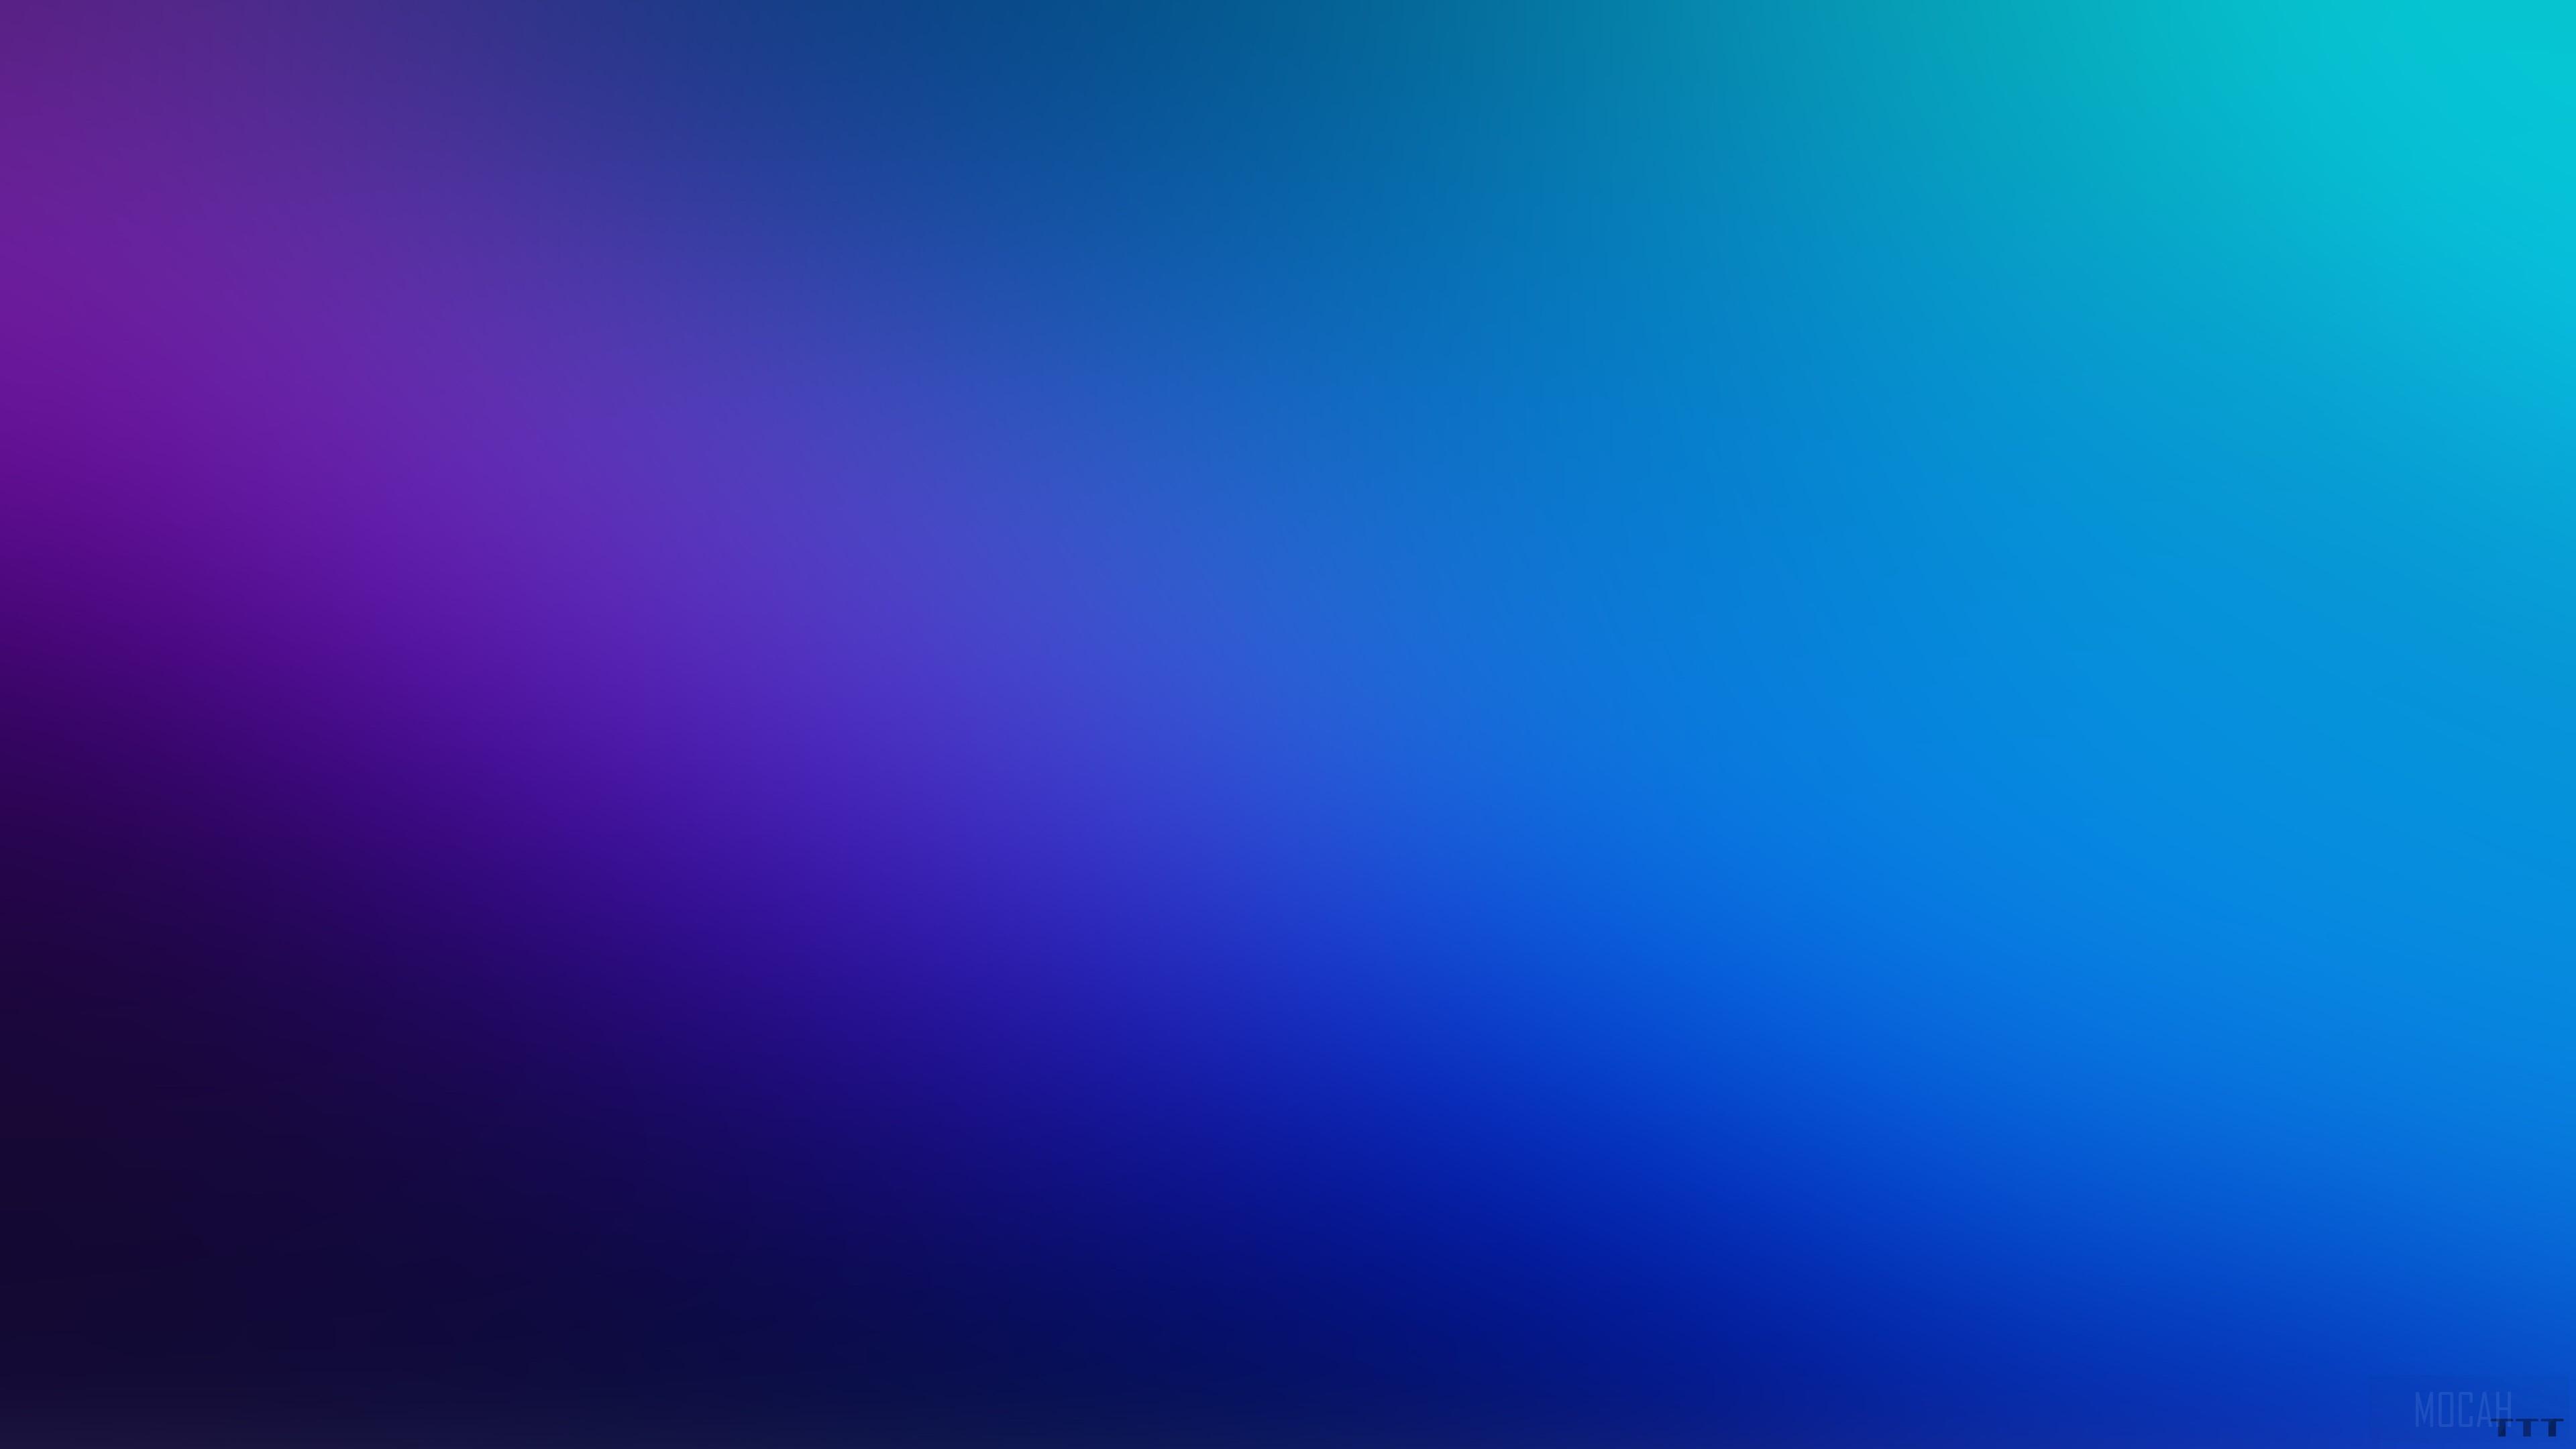 HD wallpaper, Green Blue Violet Gradient 4K